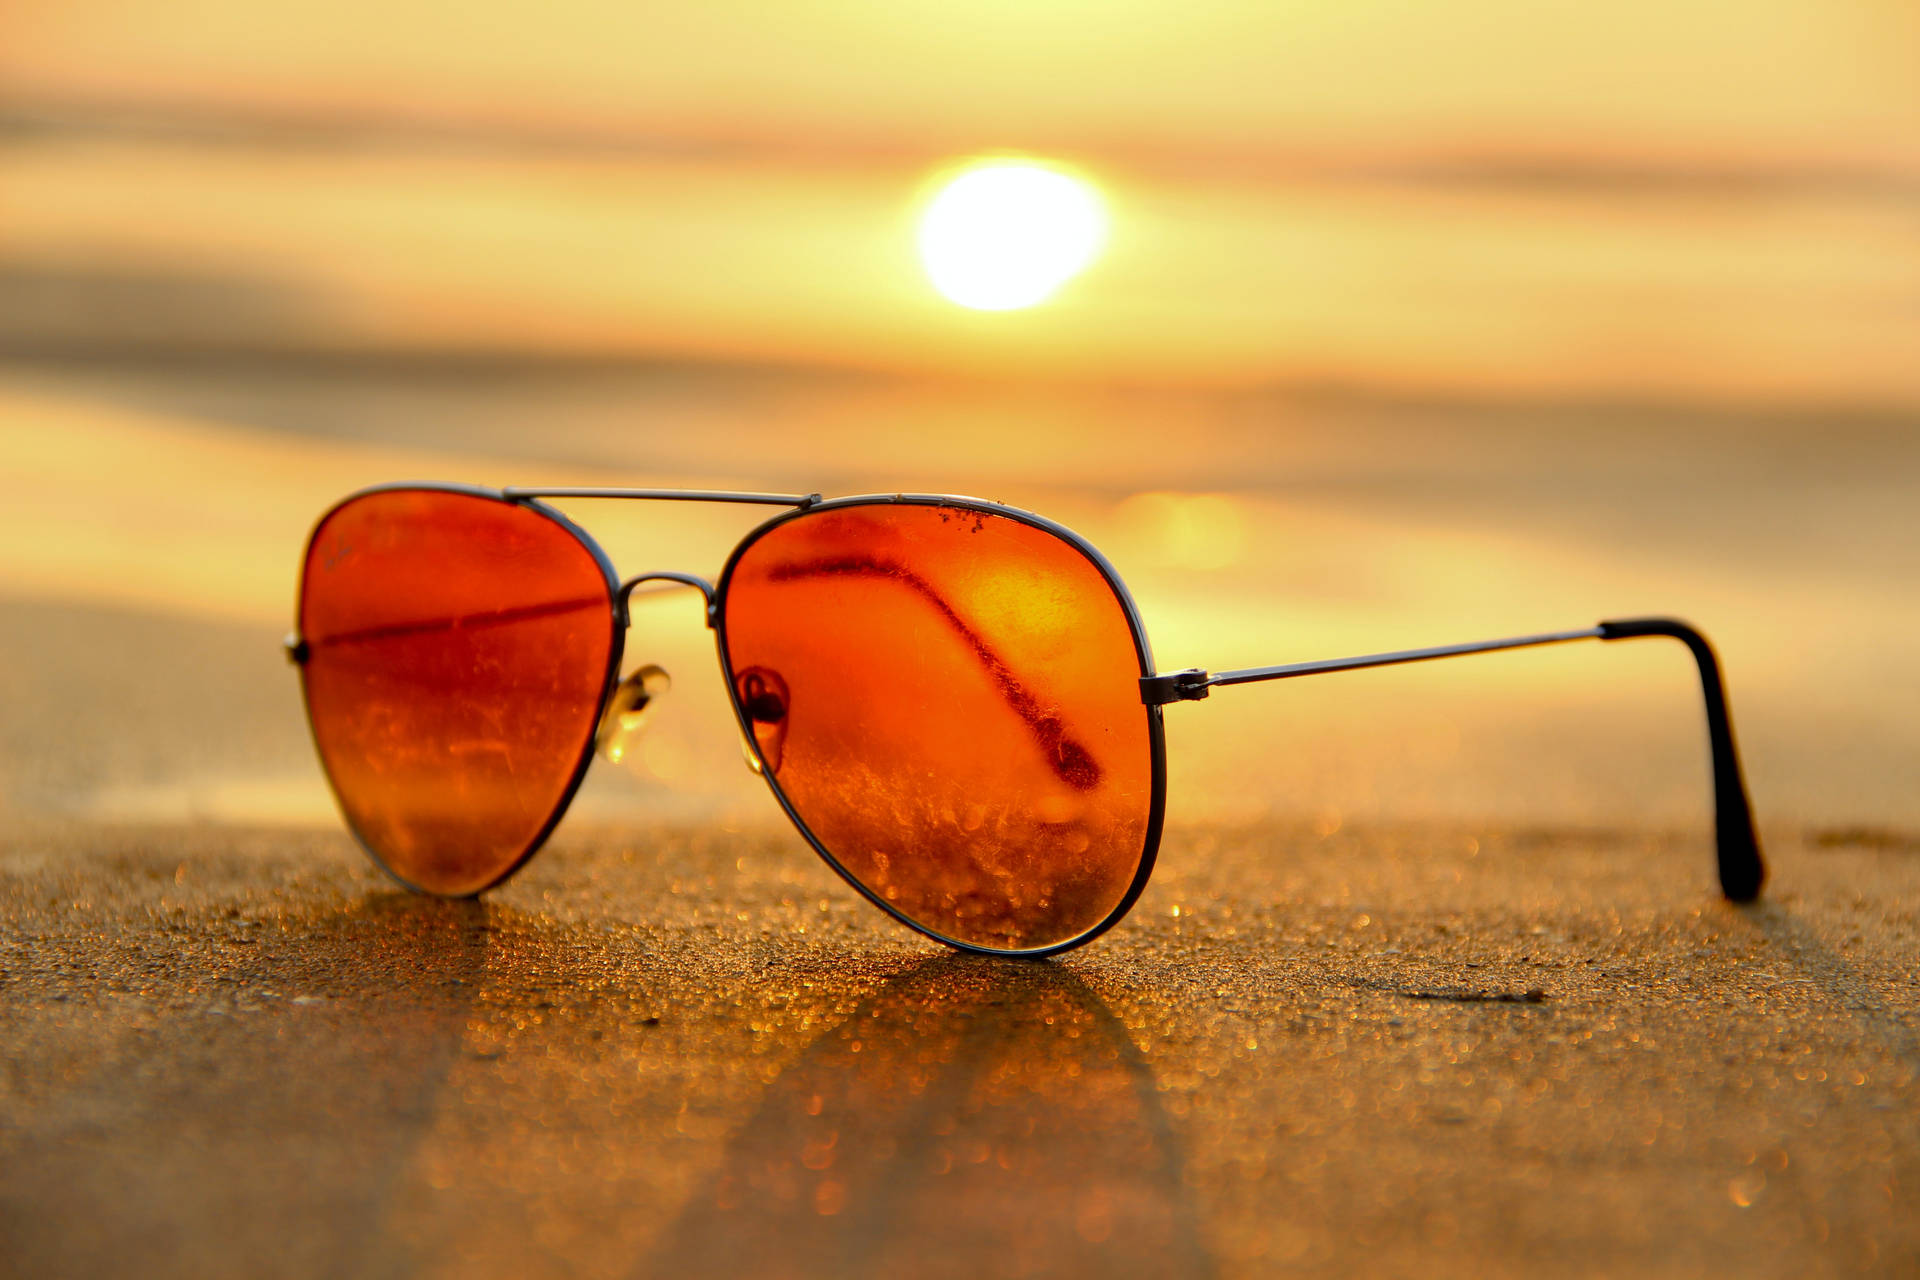 4k Ultra Hd Beach Sunglasses Wallpaper